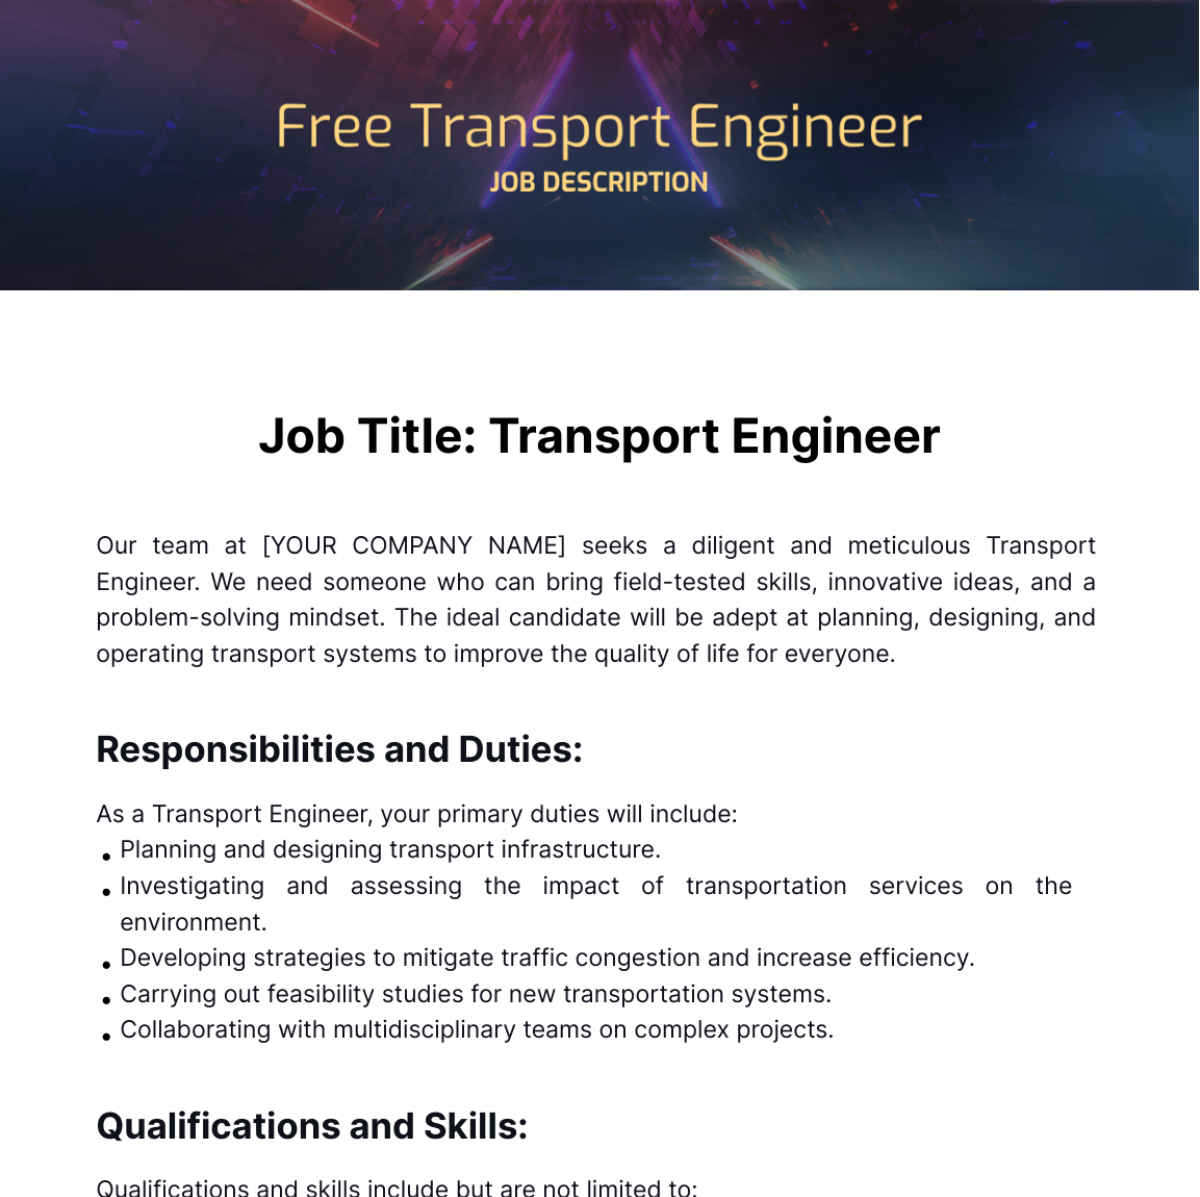 Free Transport Engineer Job Description Template